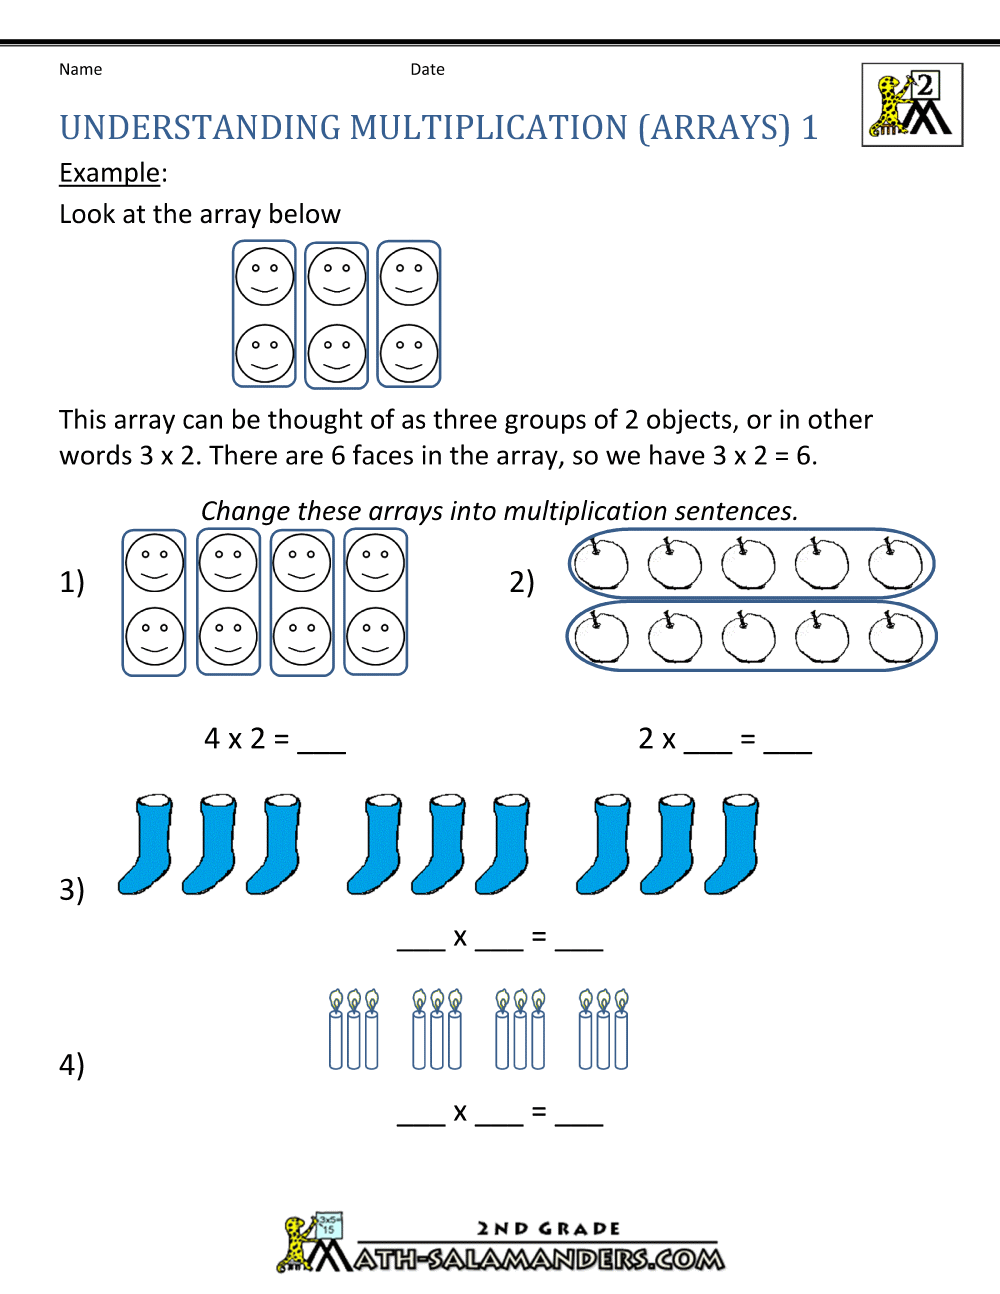  beginning multiplication worksheets understanding multiplication arrays 1 gif 1000 1294 